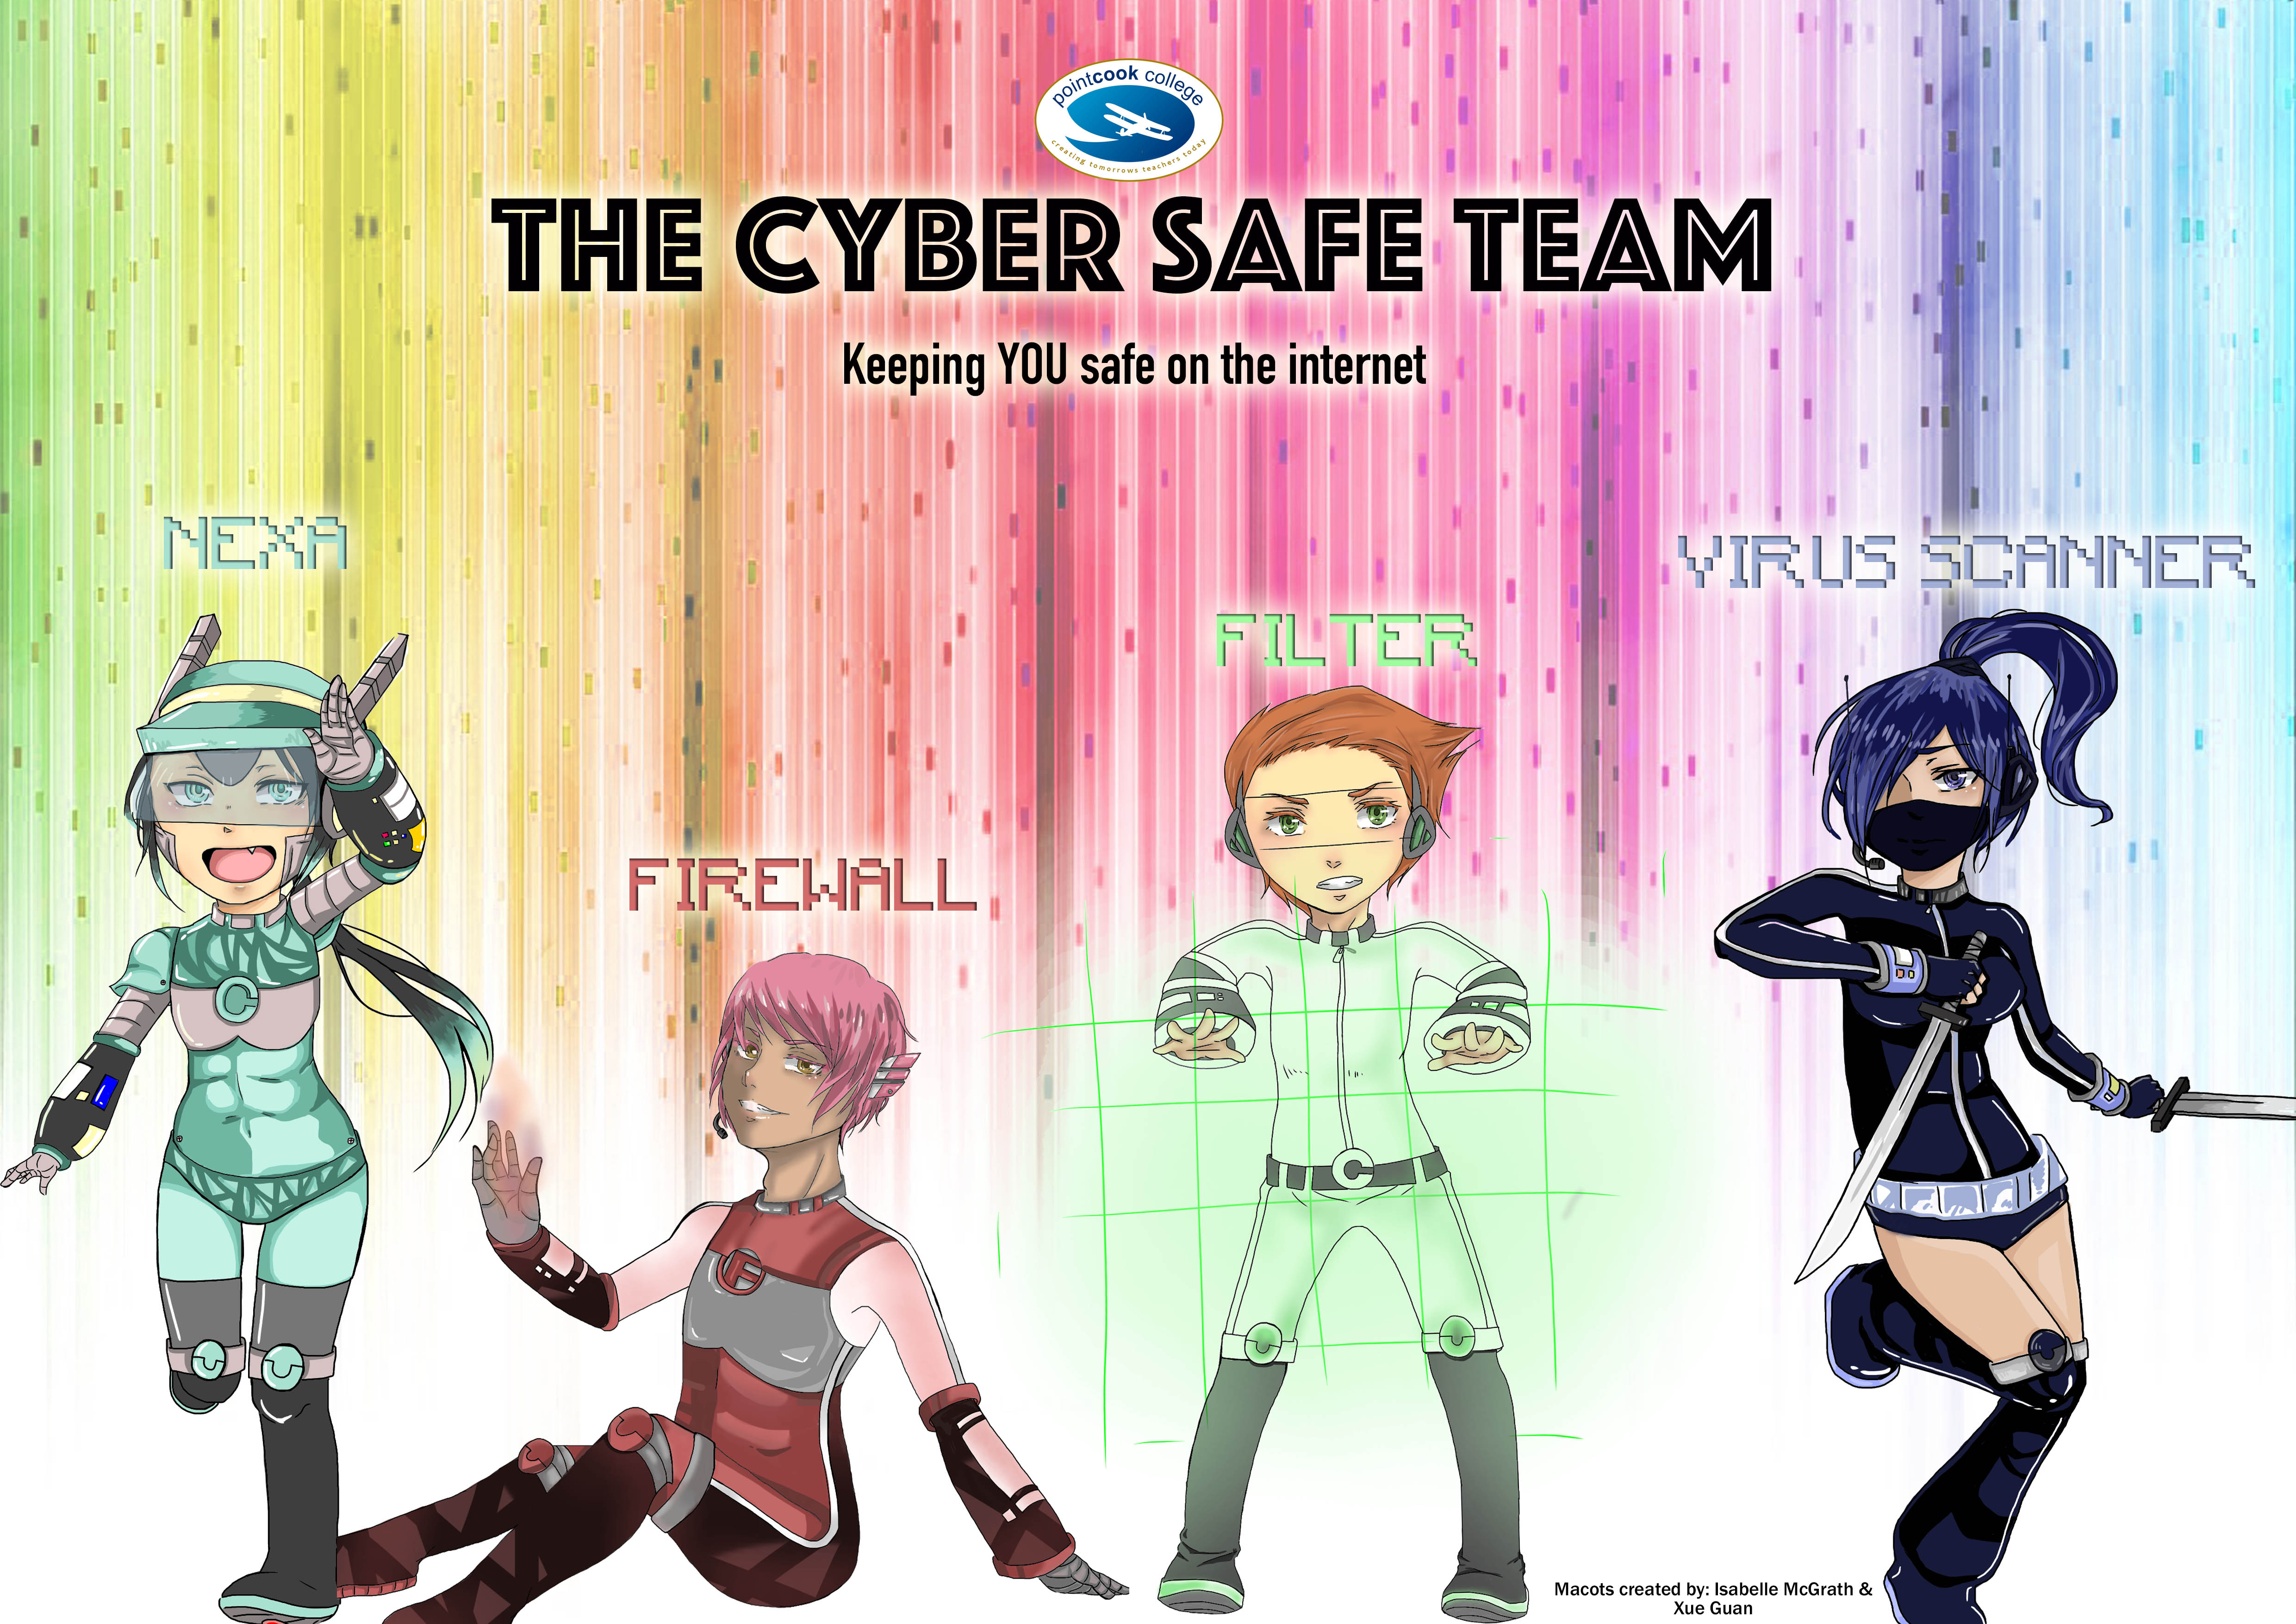 PCC cyber safe team: Nexa, Firewall, Filter and Virus Scanner